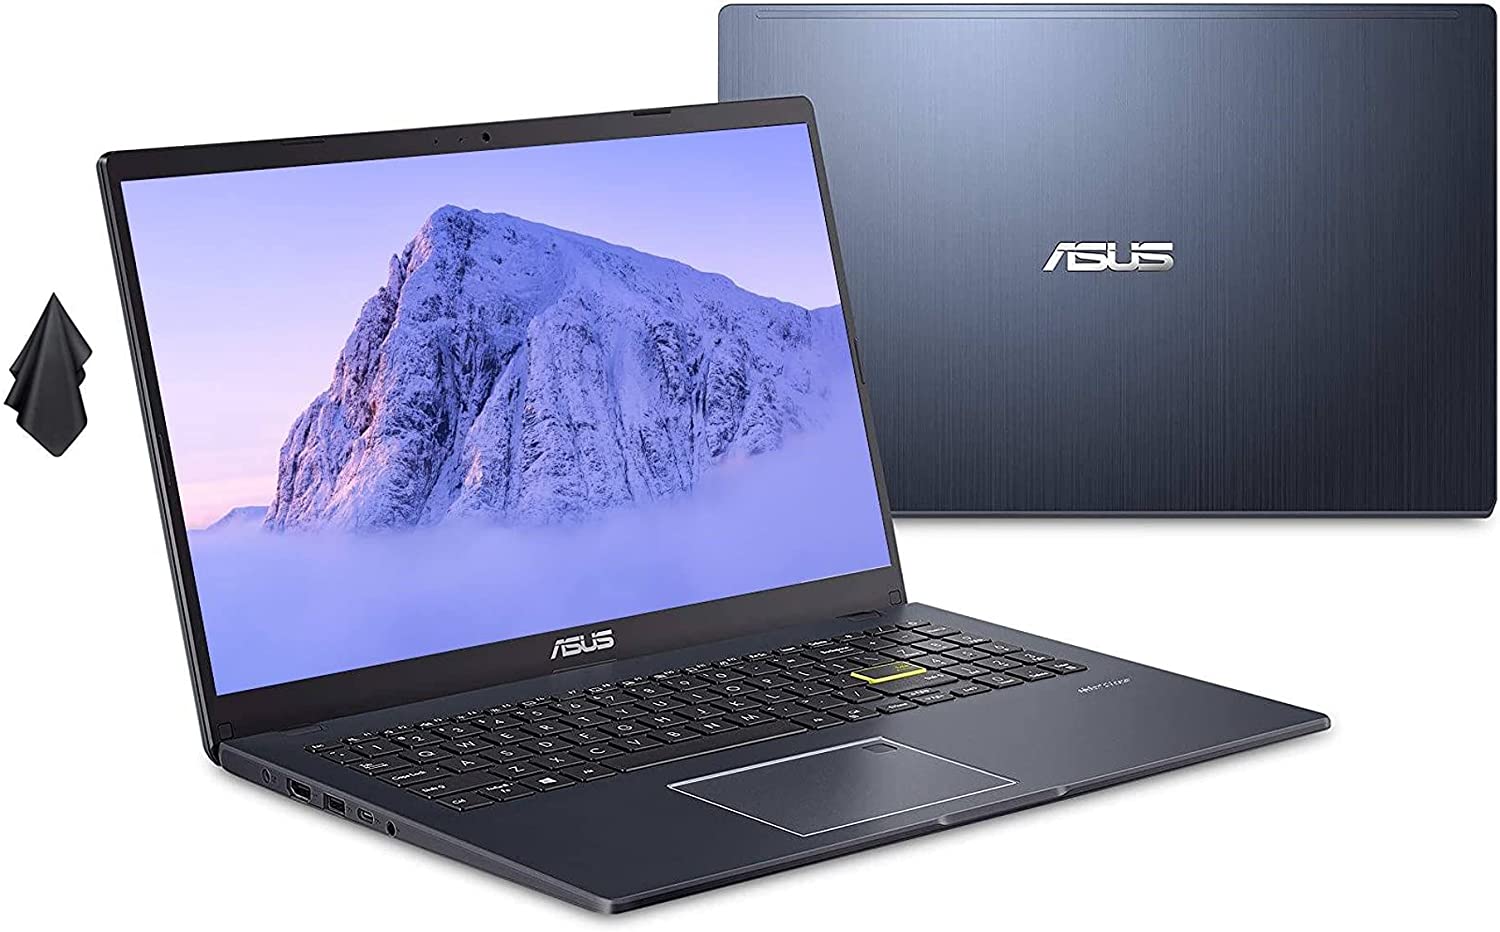 2021 ASUS L510 Ultra Thin Laptop, 15.6" FHD Display, Intel Celeron N4020 Processor, 4GB RAM, 256 GB Storage, 8Hrs+ Battery Life, Backlit Keyboard, Windows 10 Home + 1 Year Microsoft